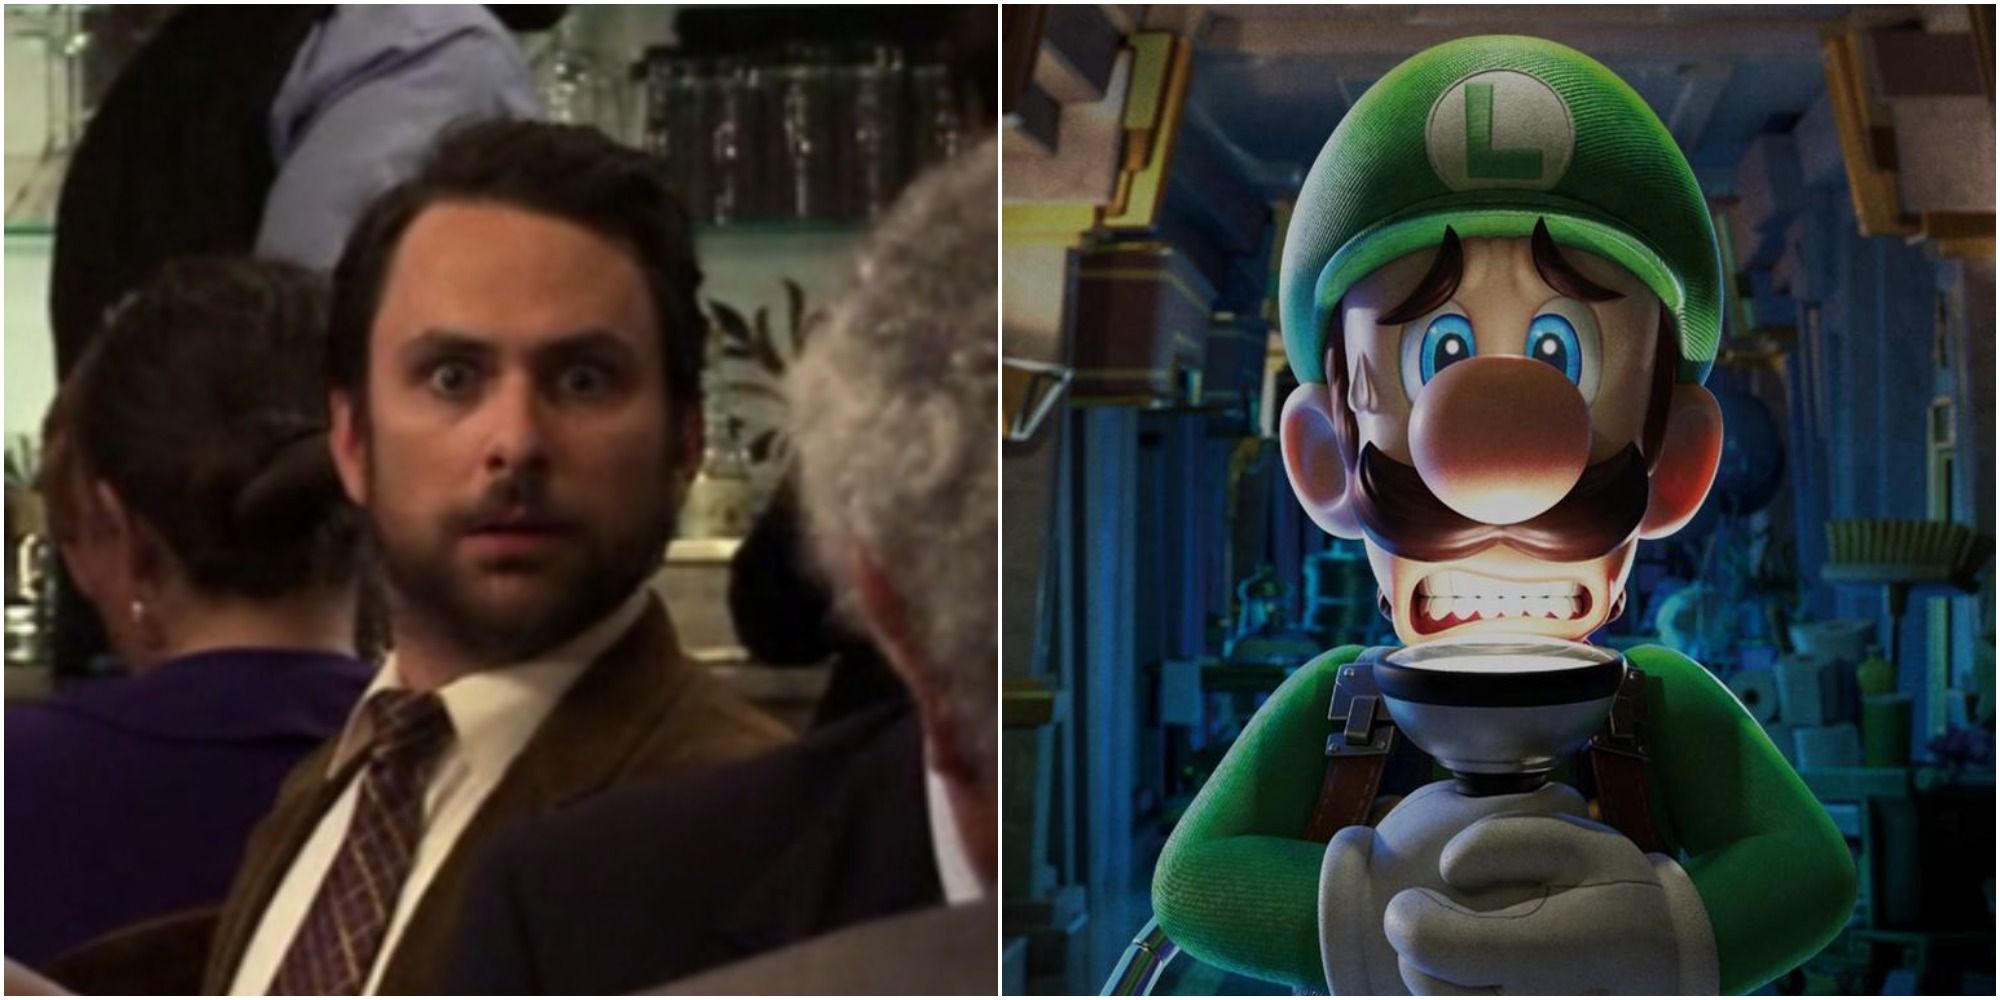 Charlie Day wants a Luigi's Mansion movie